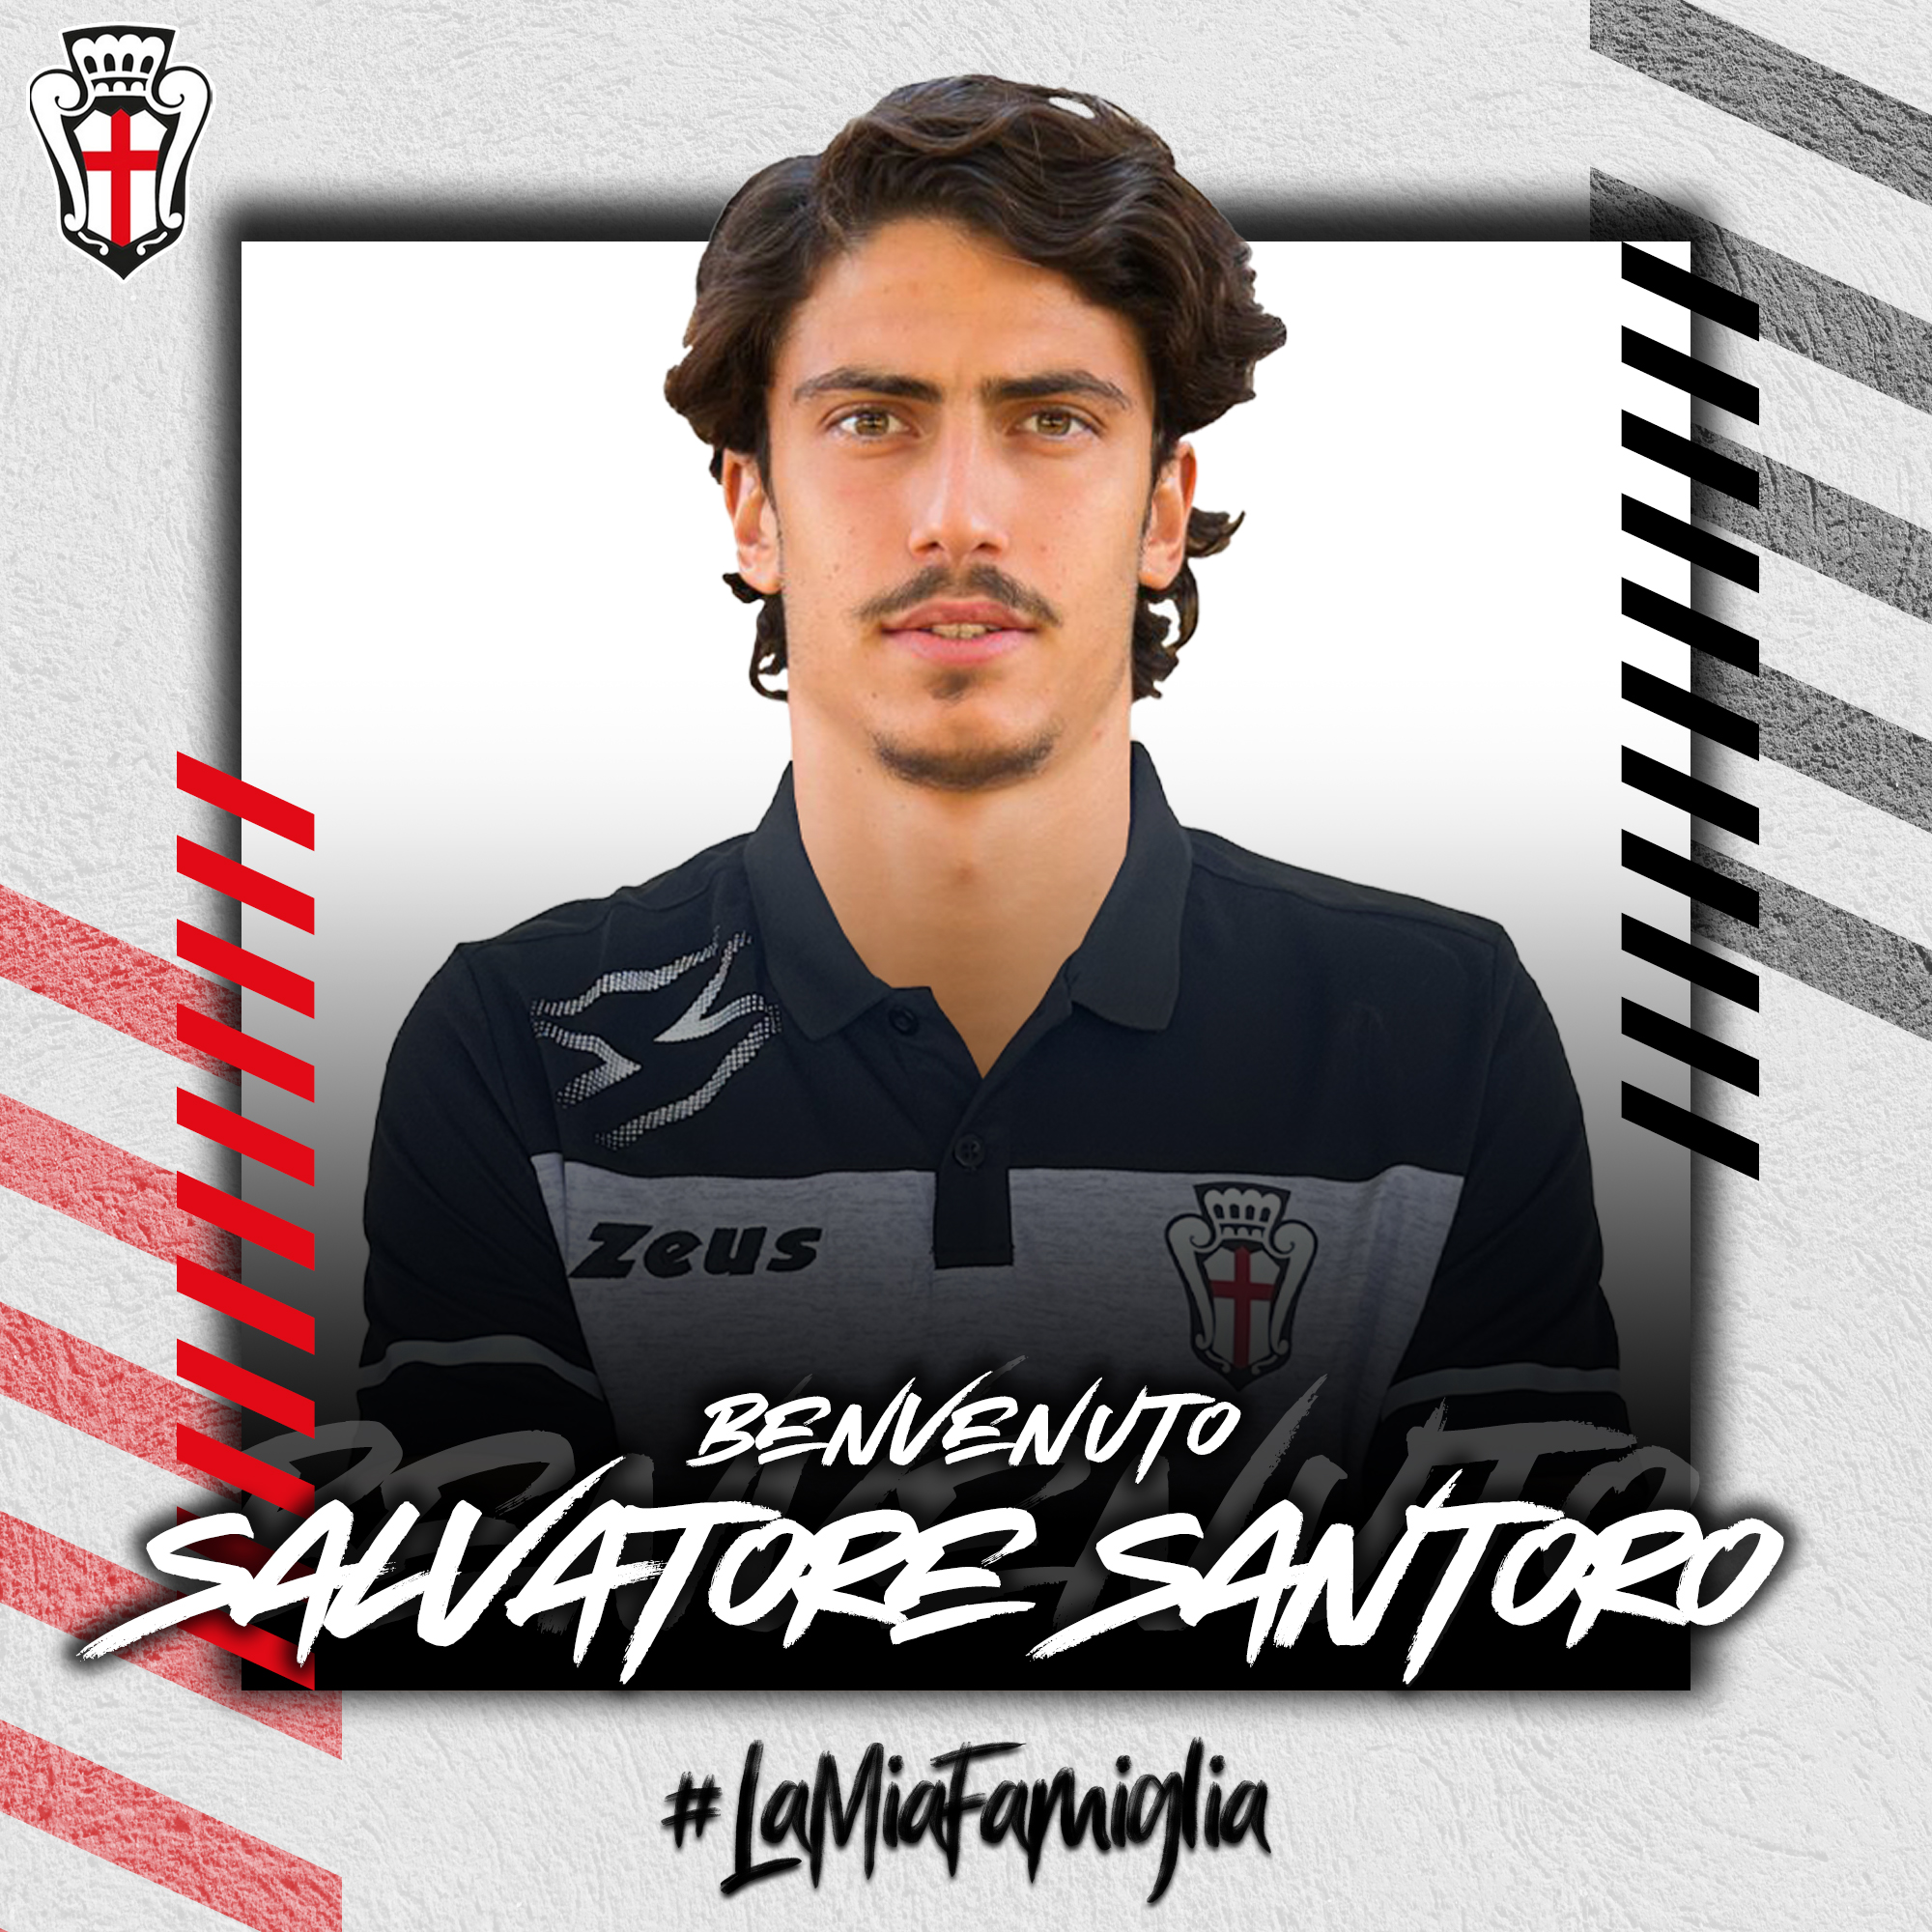 Benvenuto Salvatore Santoro